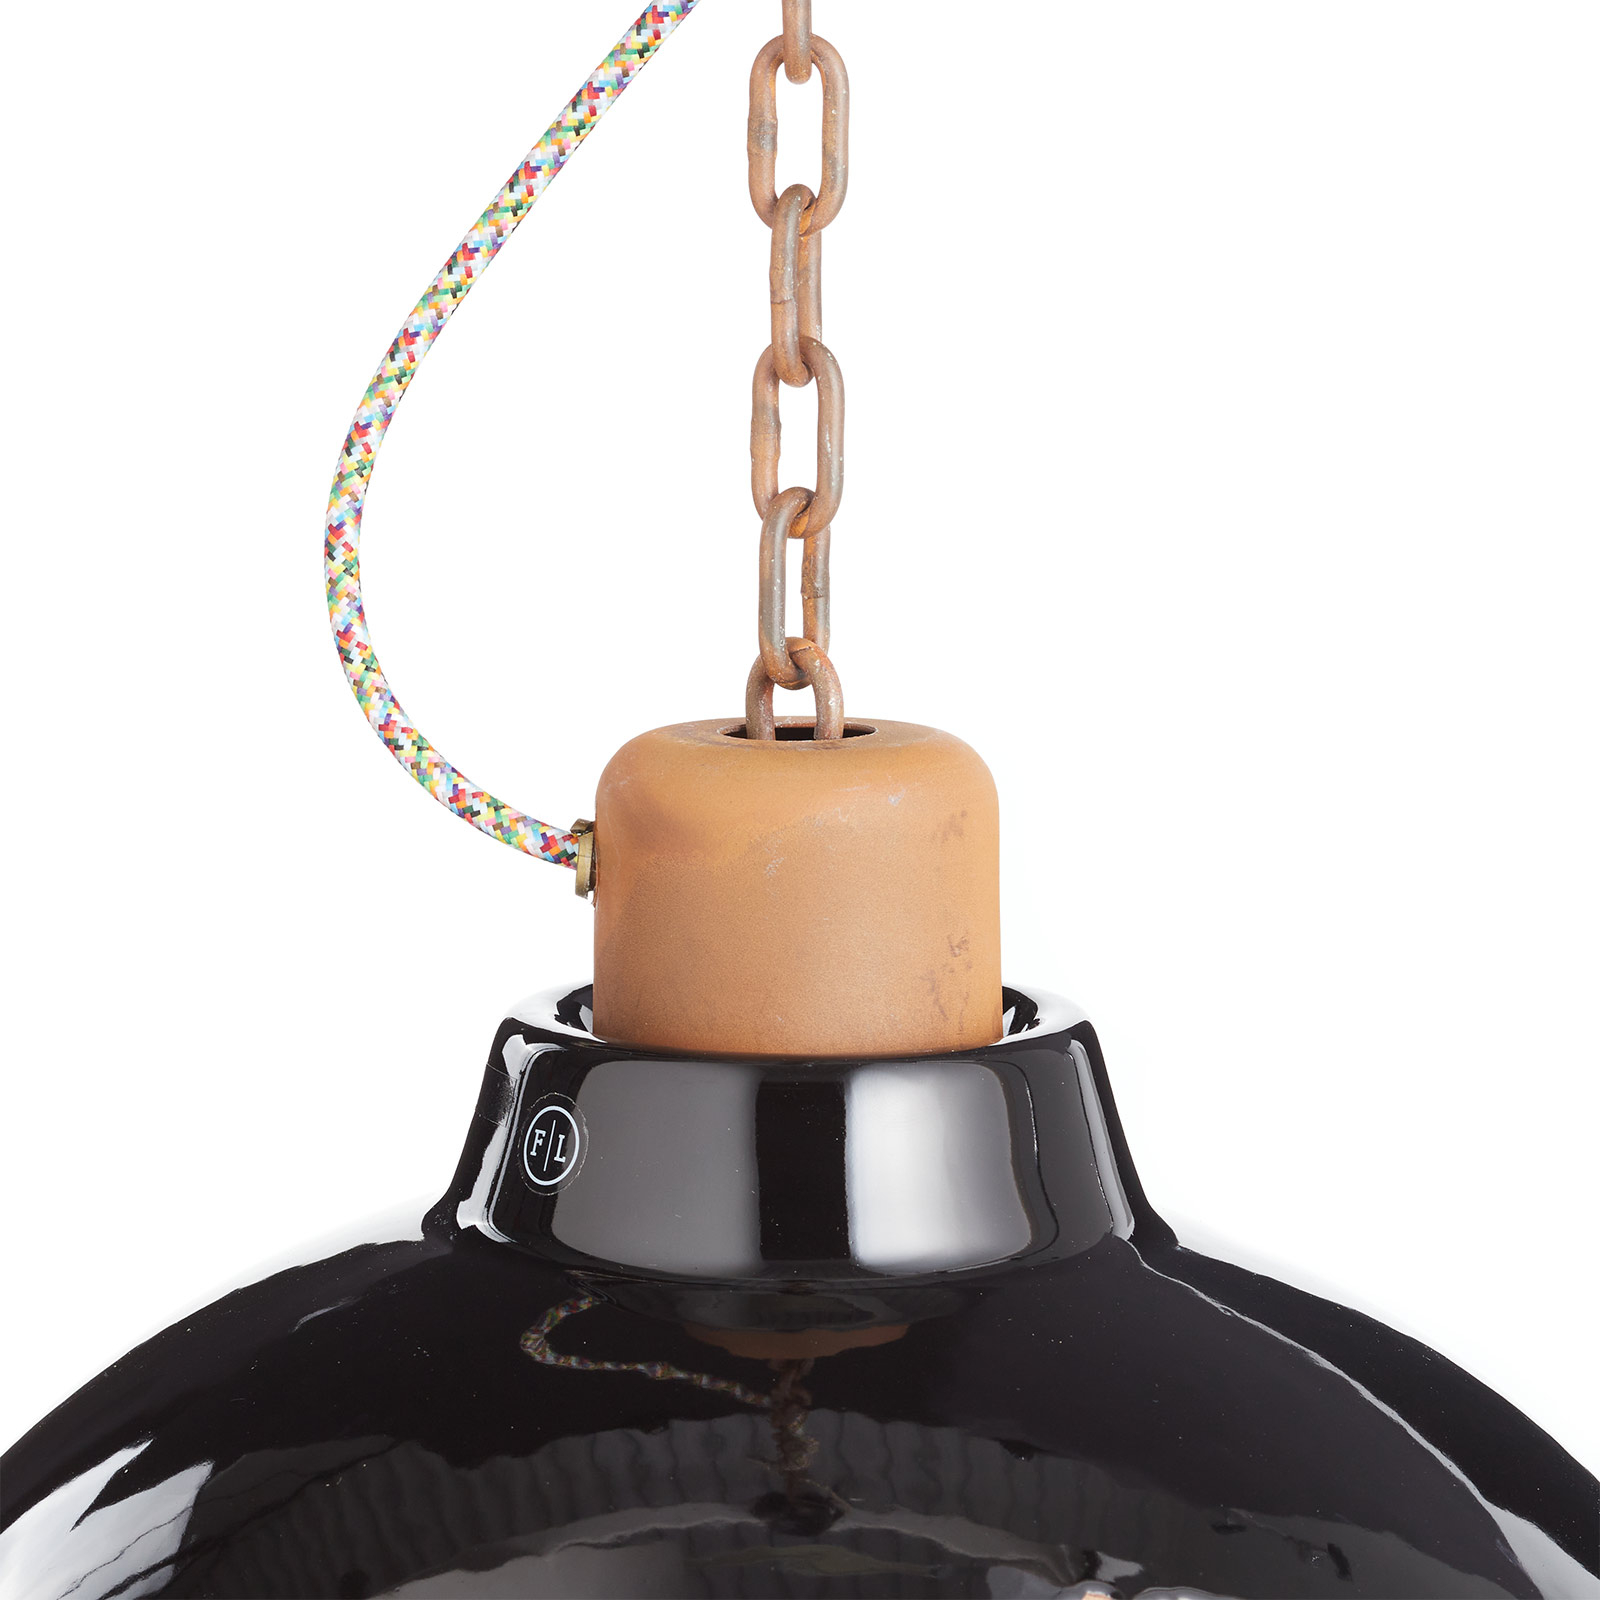 Lampada sospensione C1680 di ceramica, nero